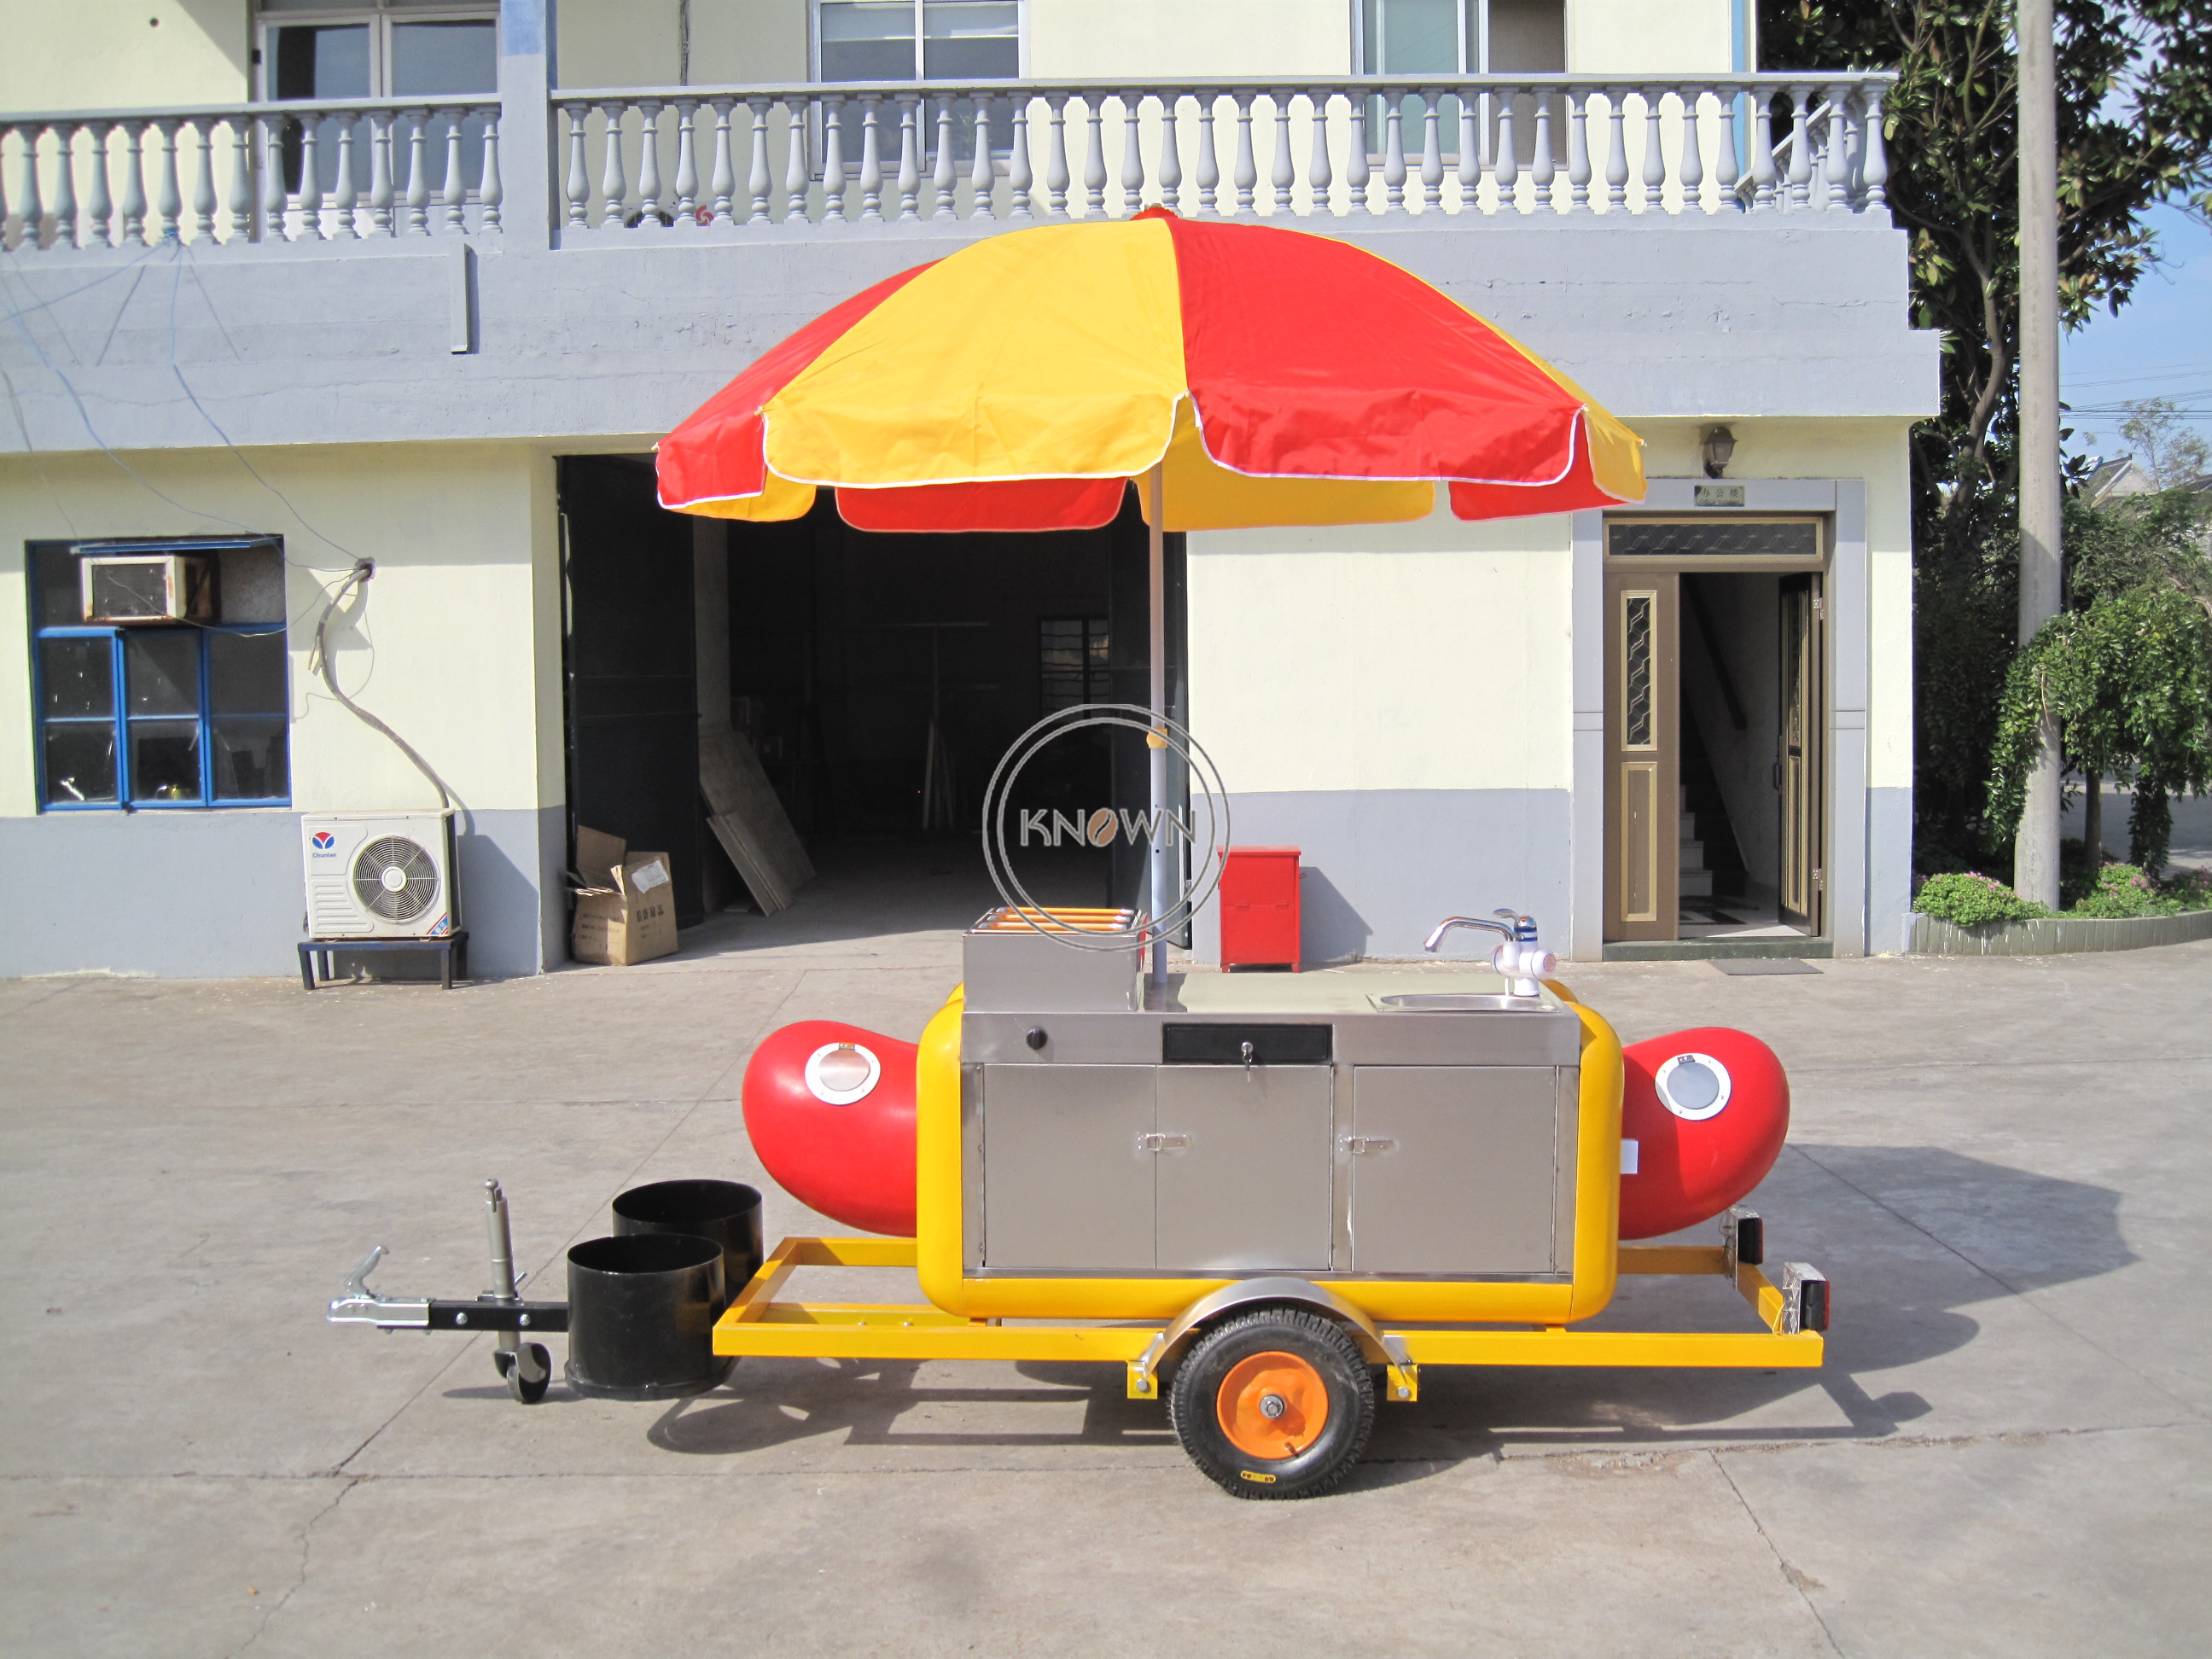 Commercial Unique Mobile Hot Dog Cart Shape Design Cute Food Trailer with Mini Hot Dog Vending Cart